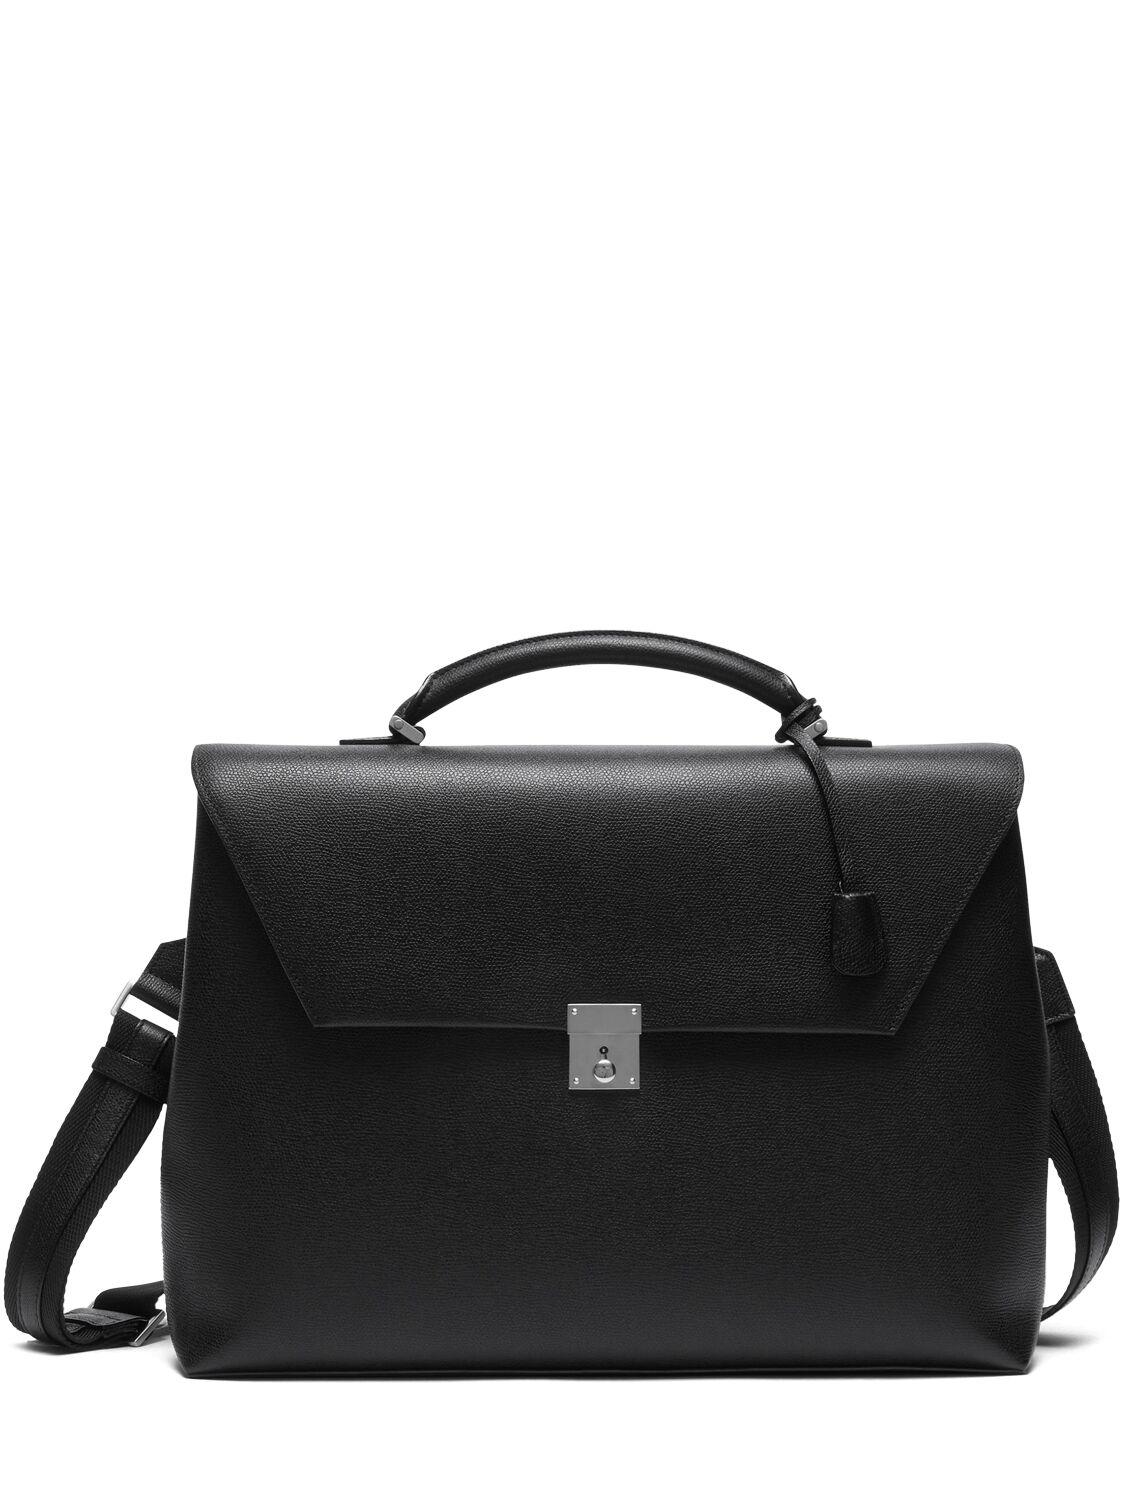 Image of Avietta Leather Briefcase